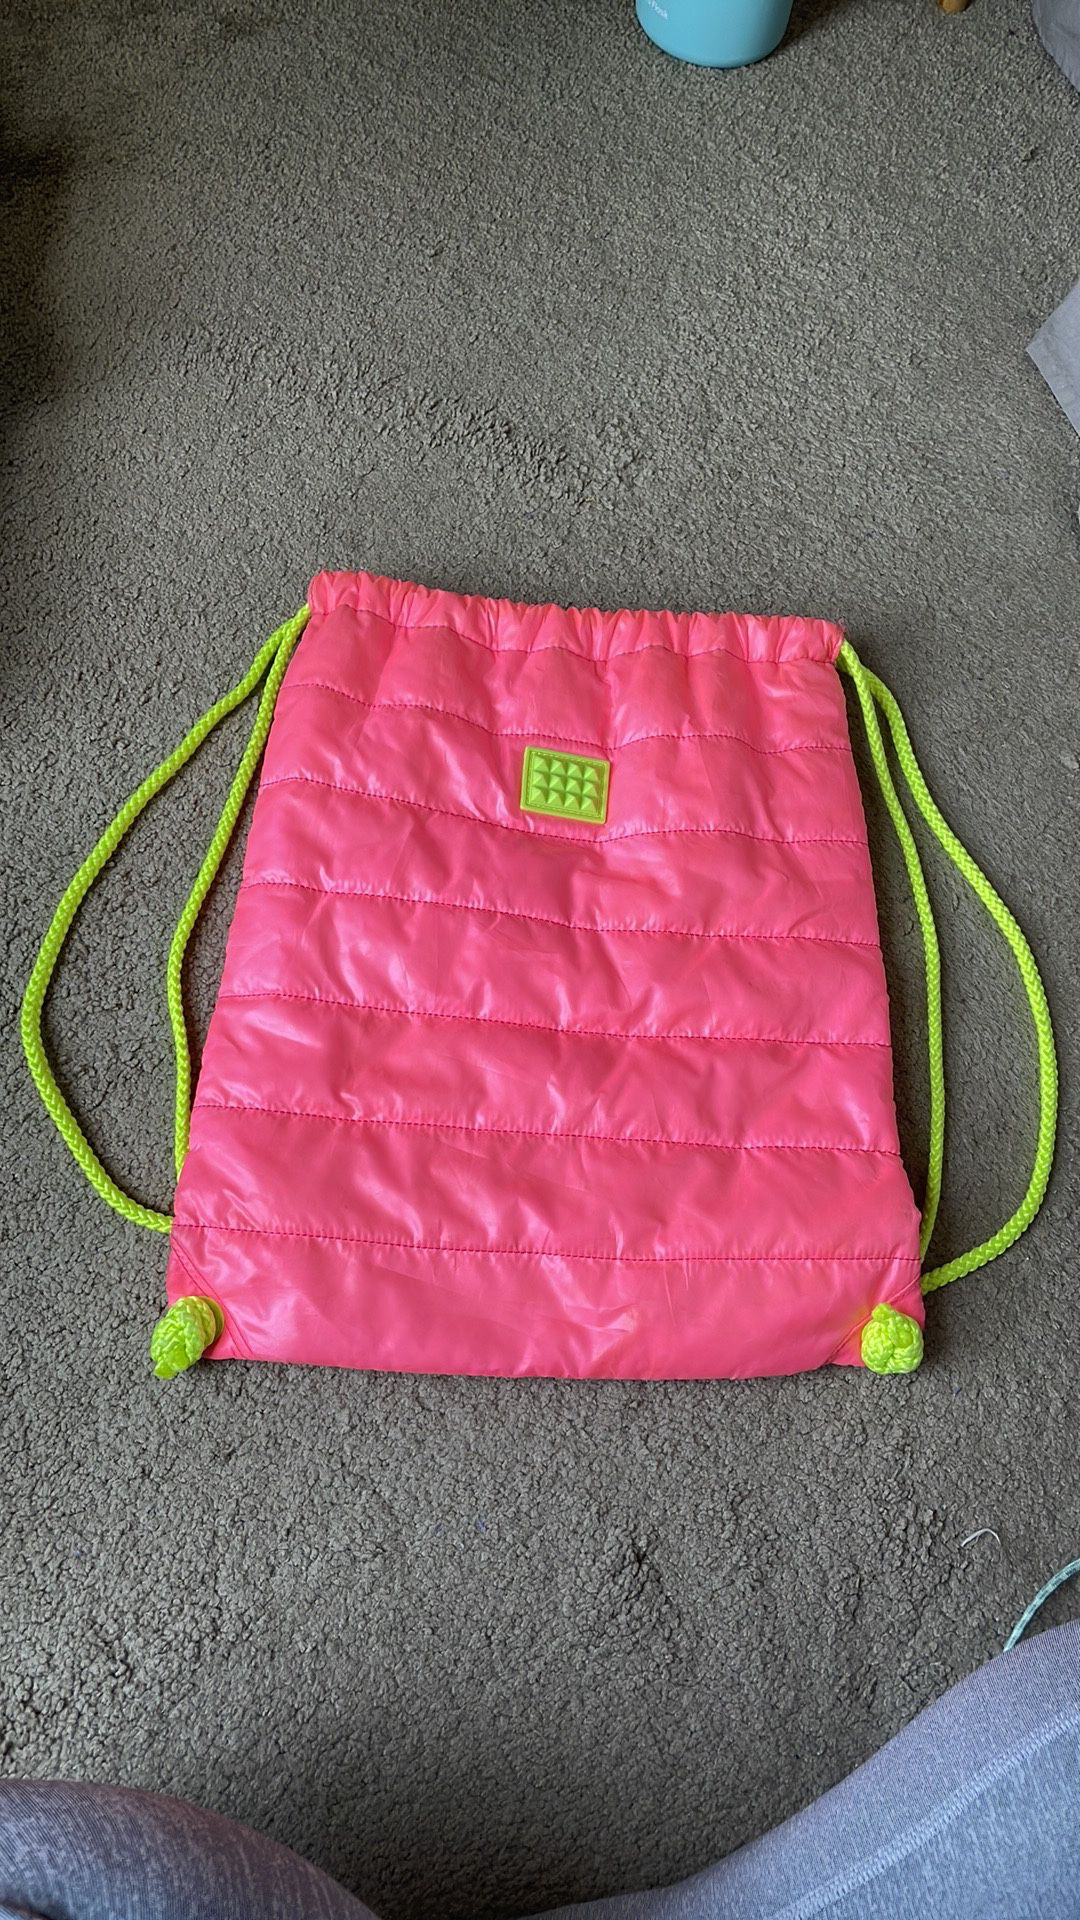 Puffy Drawstring Backpack